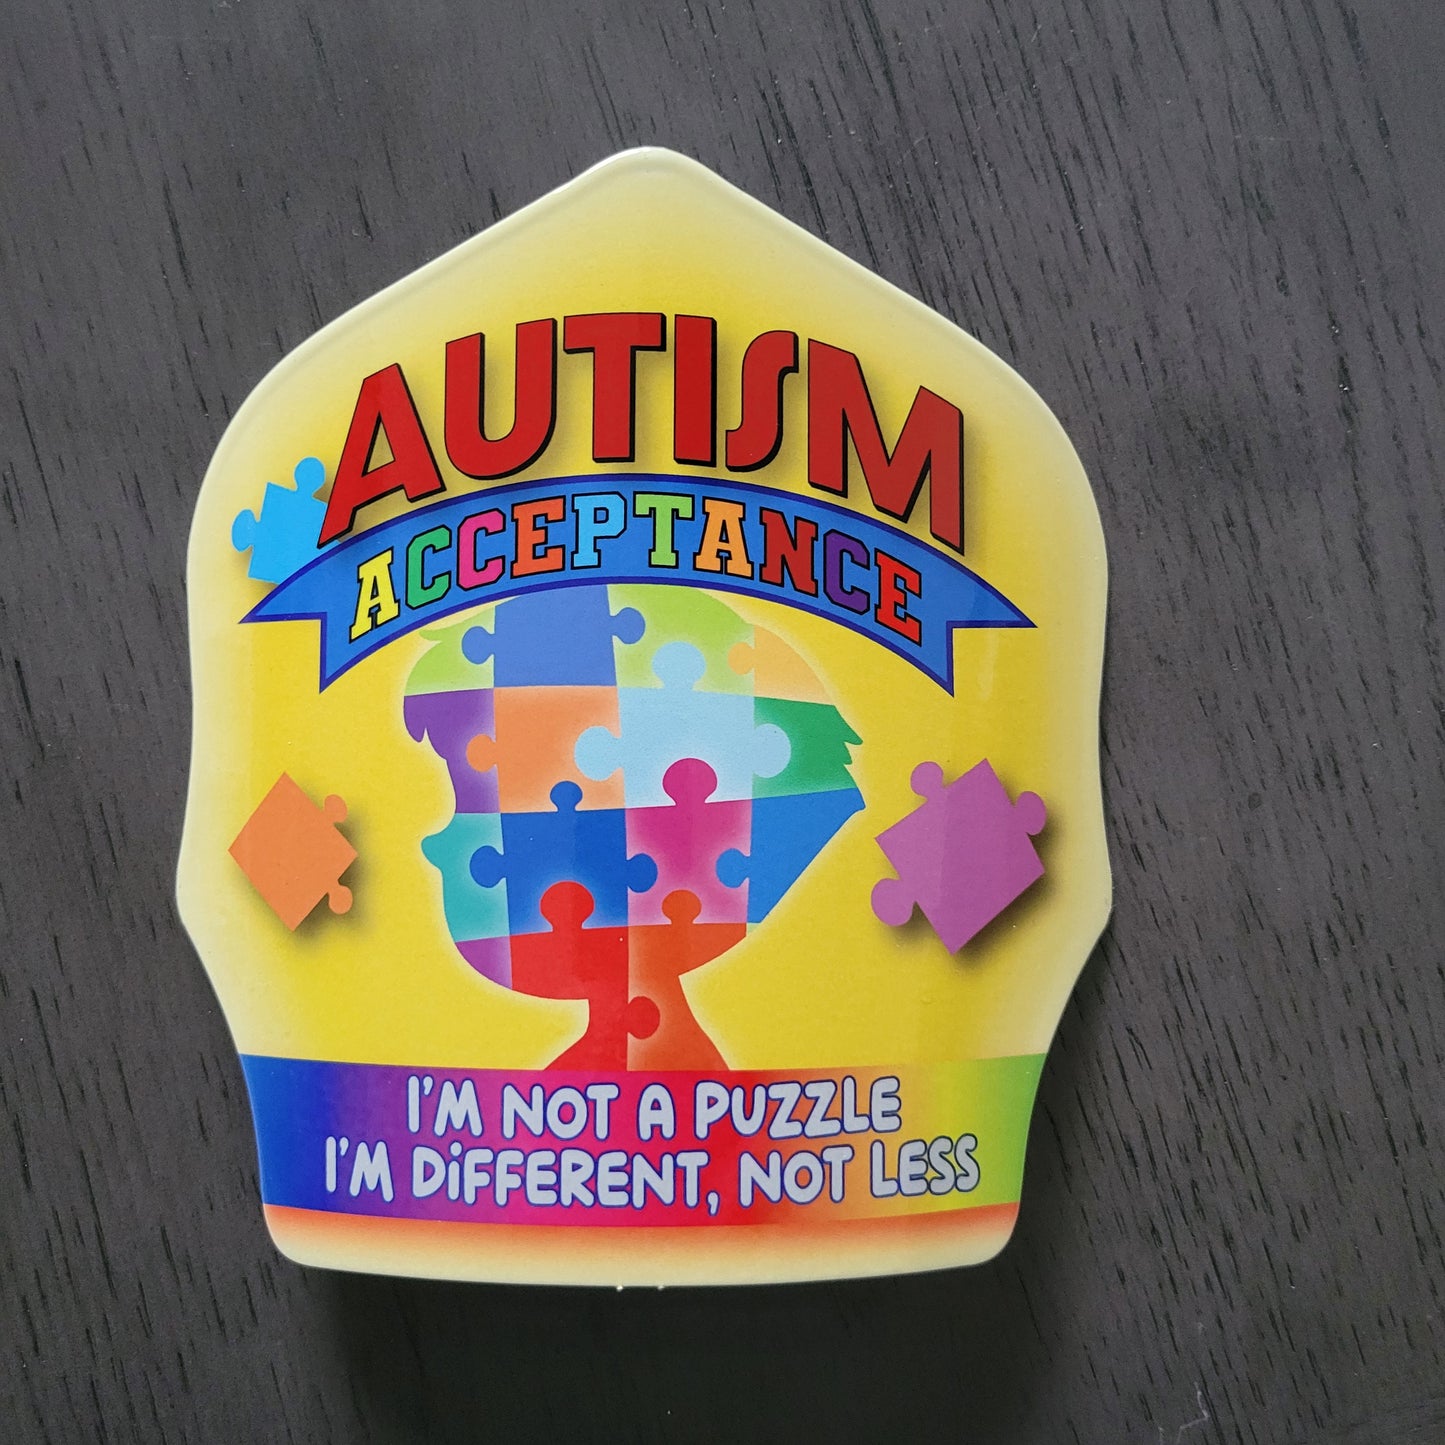 Helmet Shield of the Month for April, Autism Acceptance